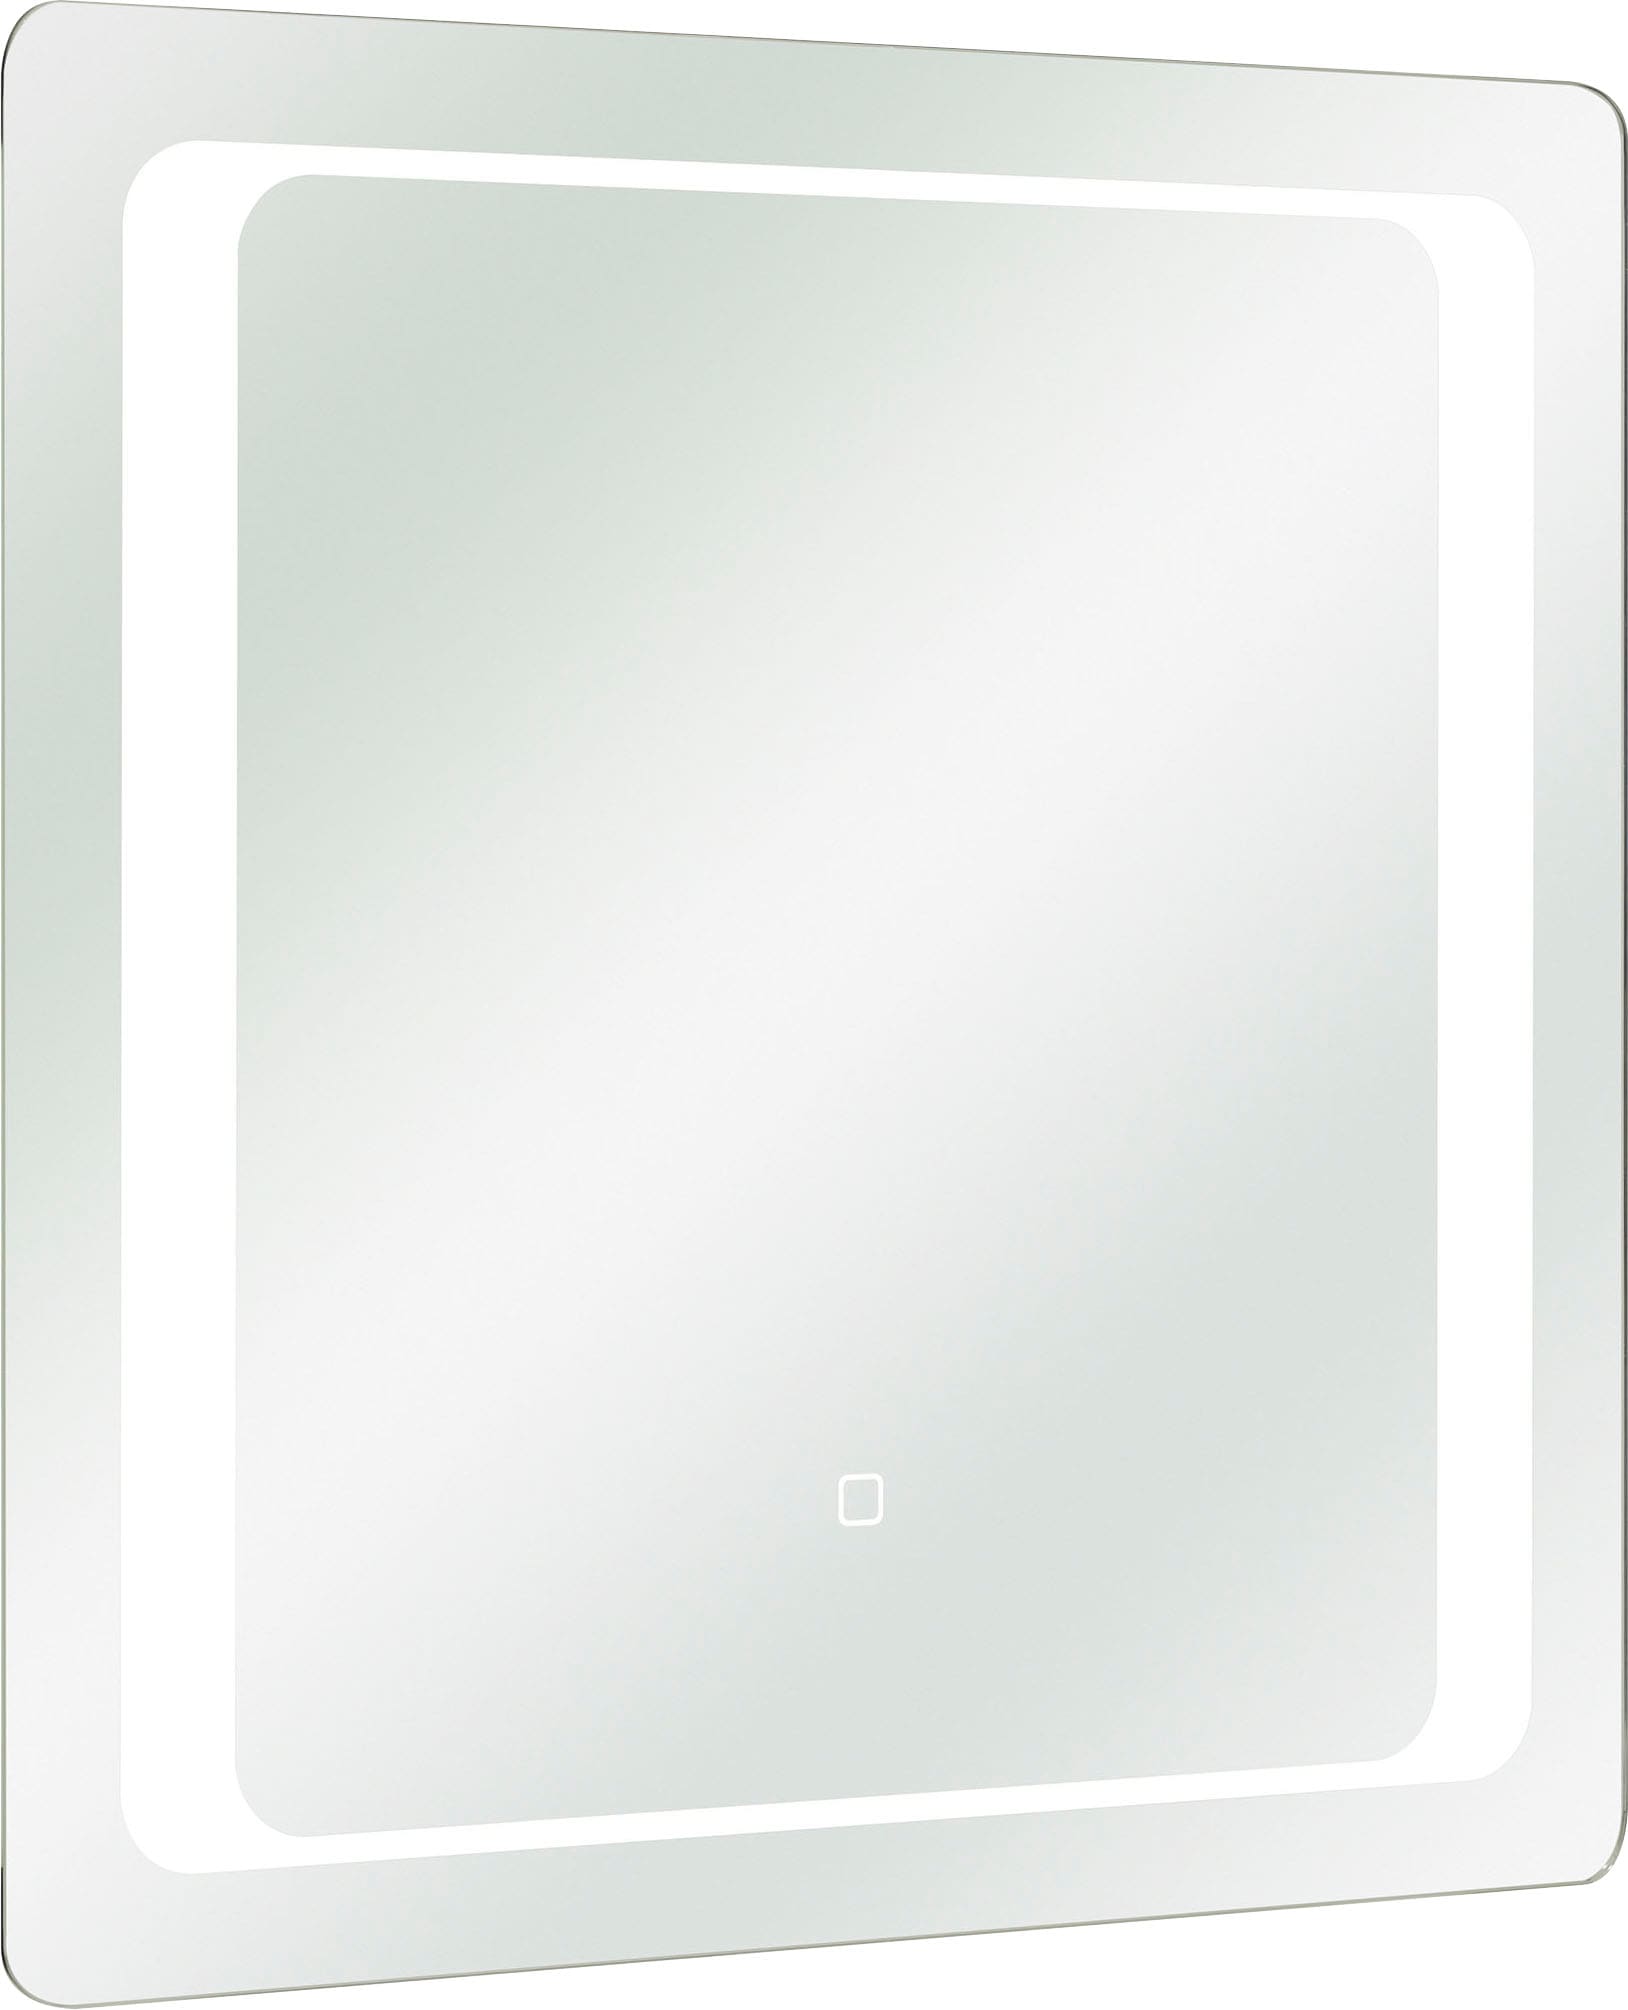 Saphir Badspiegel »Quickset Spiegel inkl. LED-Beleuchtung und Touchsensor, 70 cm breit«, Flächenspiegel rechteckig, 12V LED, 1250 LM, Wandspiegel